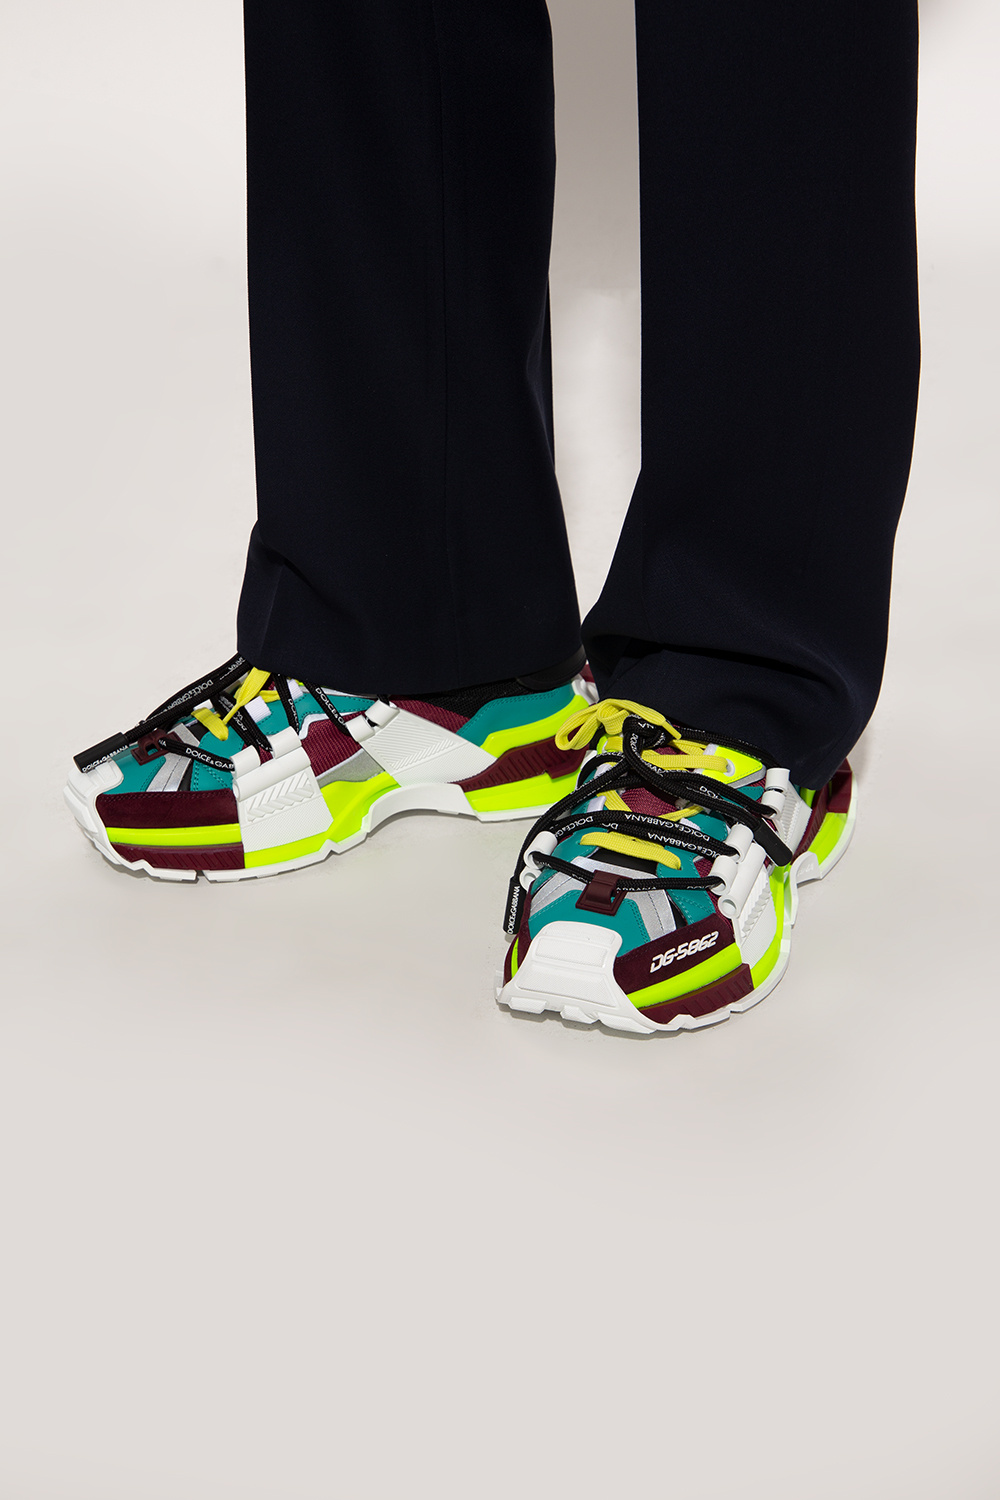 Dolce & Gabbana Kids Baby Pre-Walker Shoes for Kids ‘Space’ sneakers